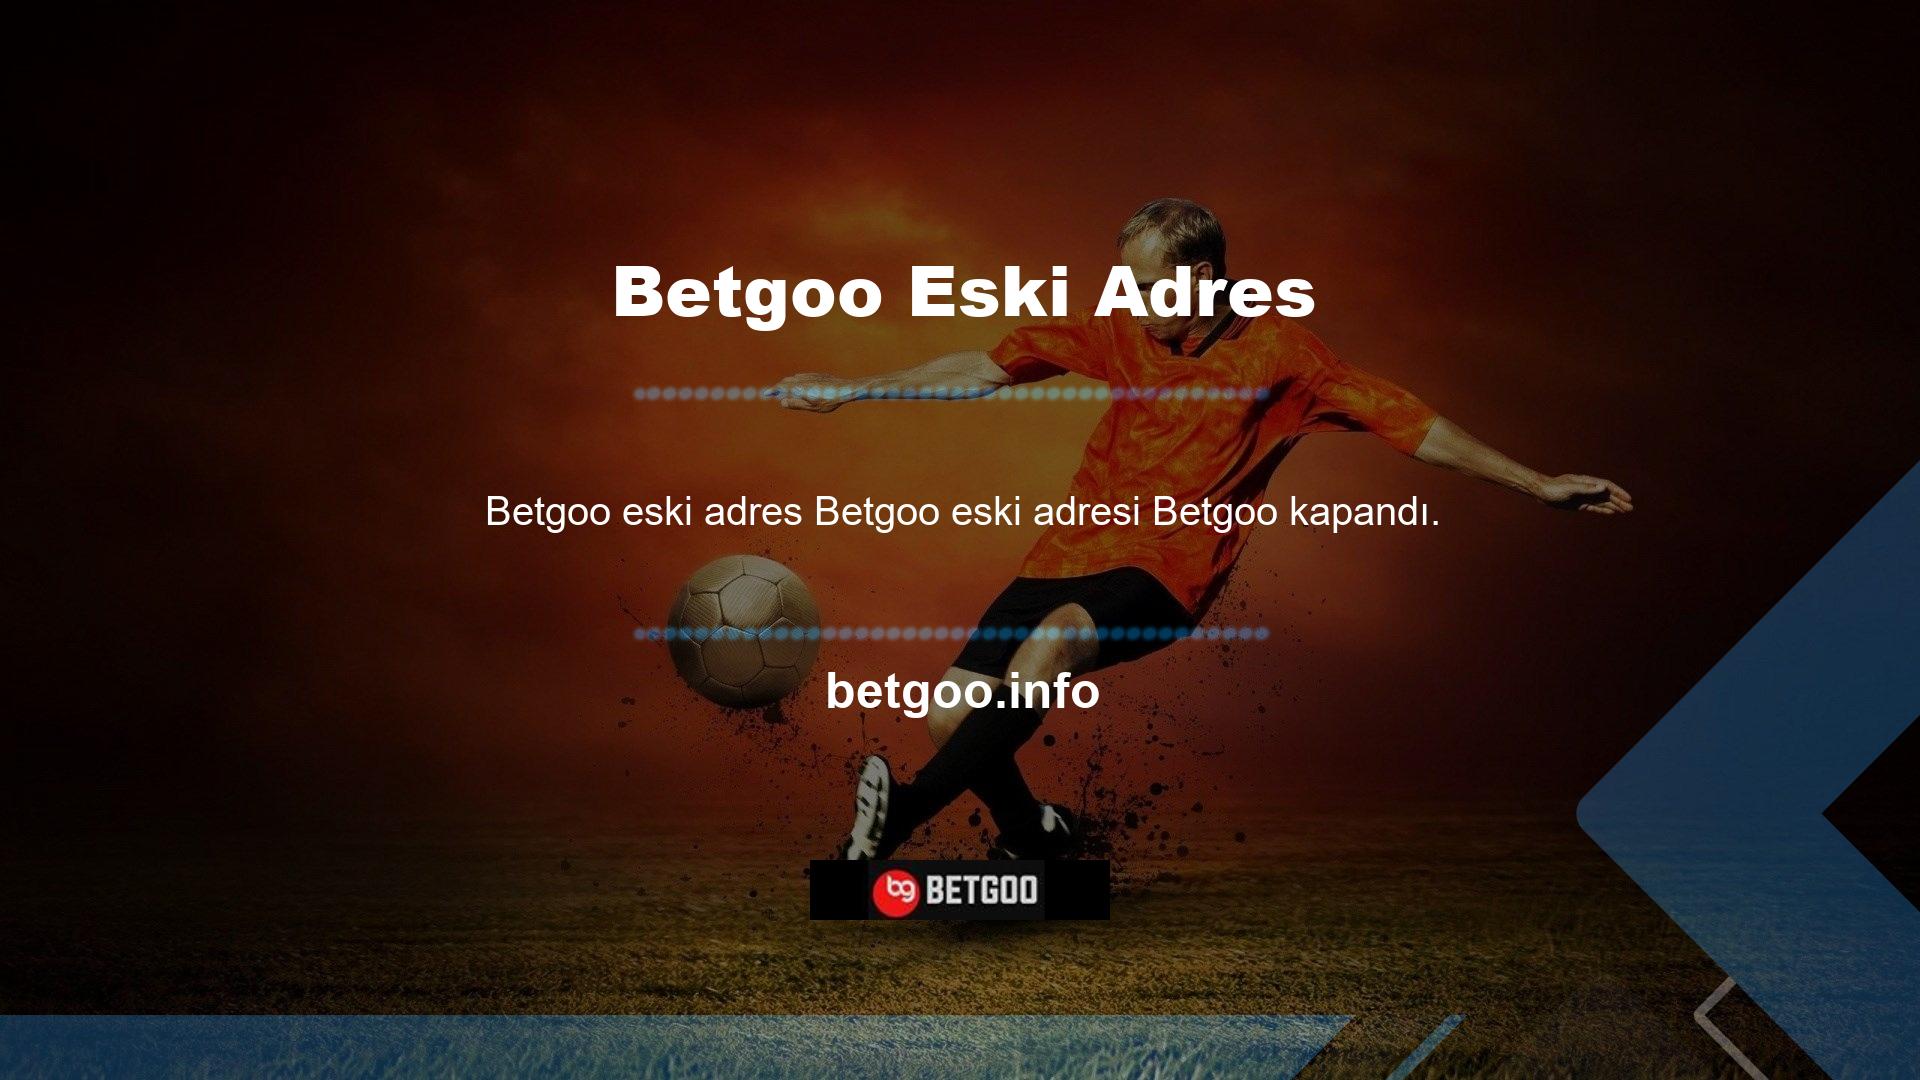 Yeni adresi Betgoo